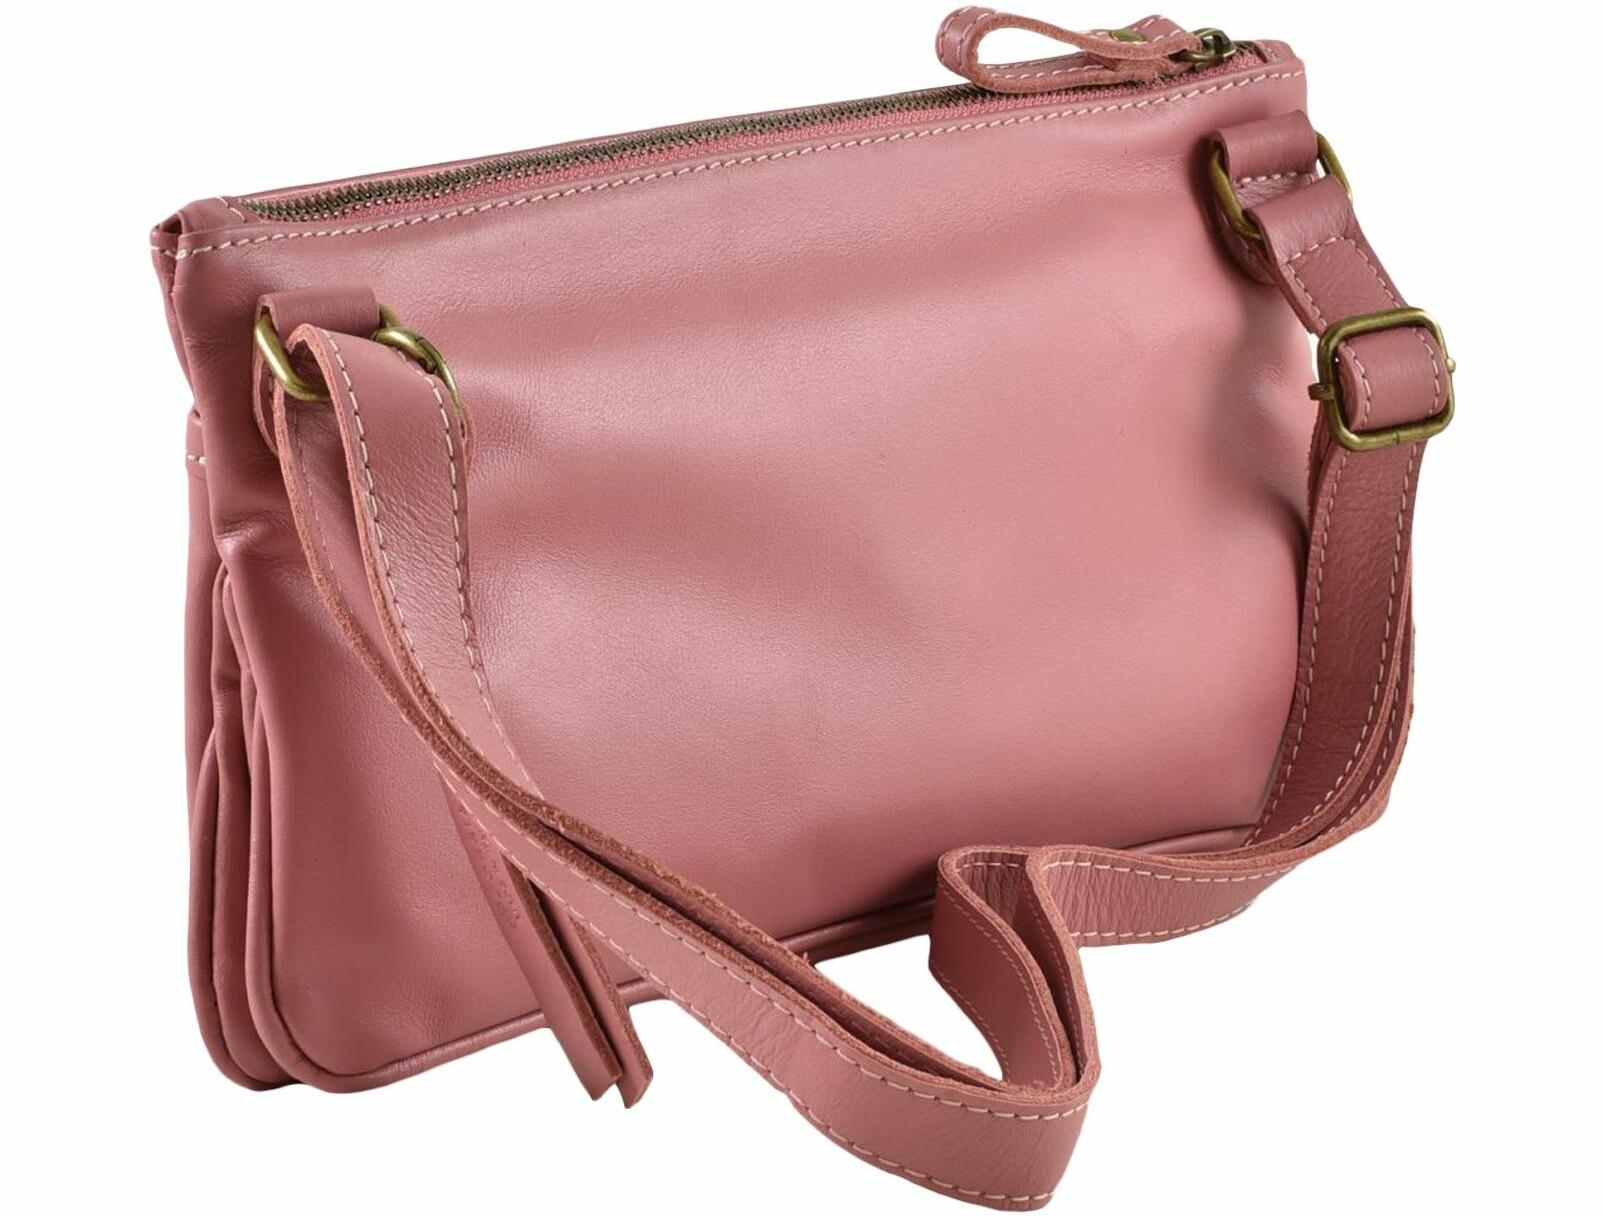 Corsia Women's Powder Pink Handbag at FORZIERI